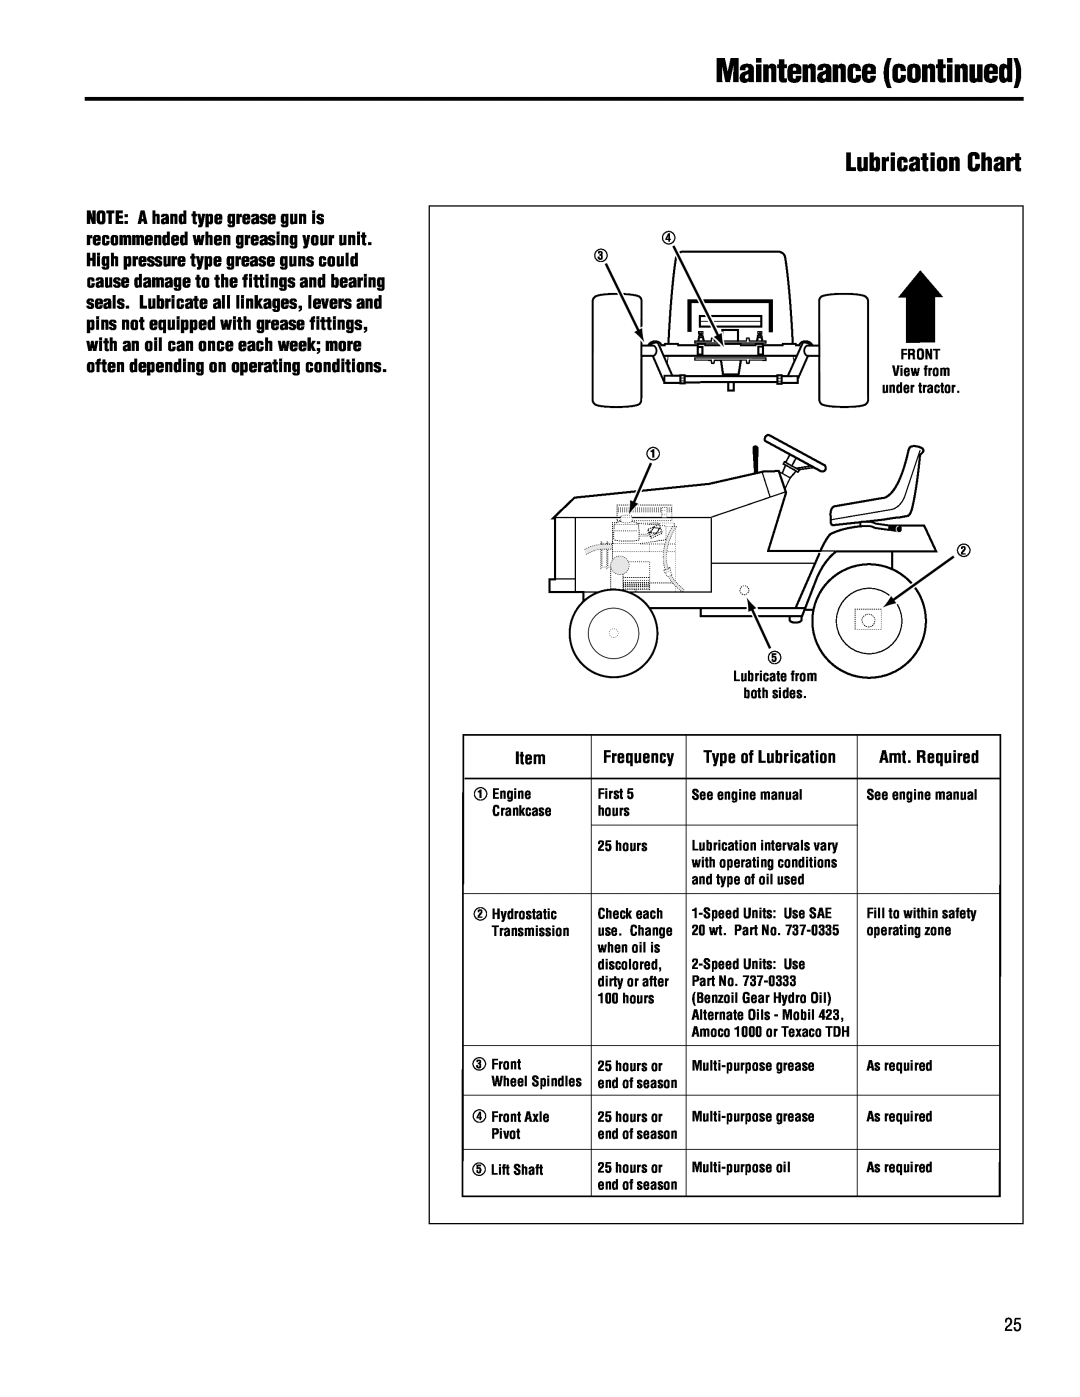 Troy-Bilt 13101 - GTX 16, 13101-GTX 16, 13074-GTX 18 manual Lubrication Chart, Amt. Required, Maintenance continued 